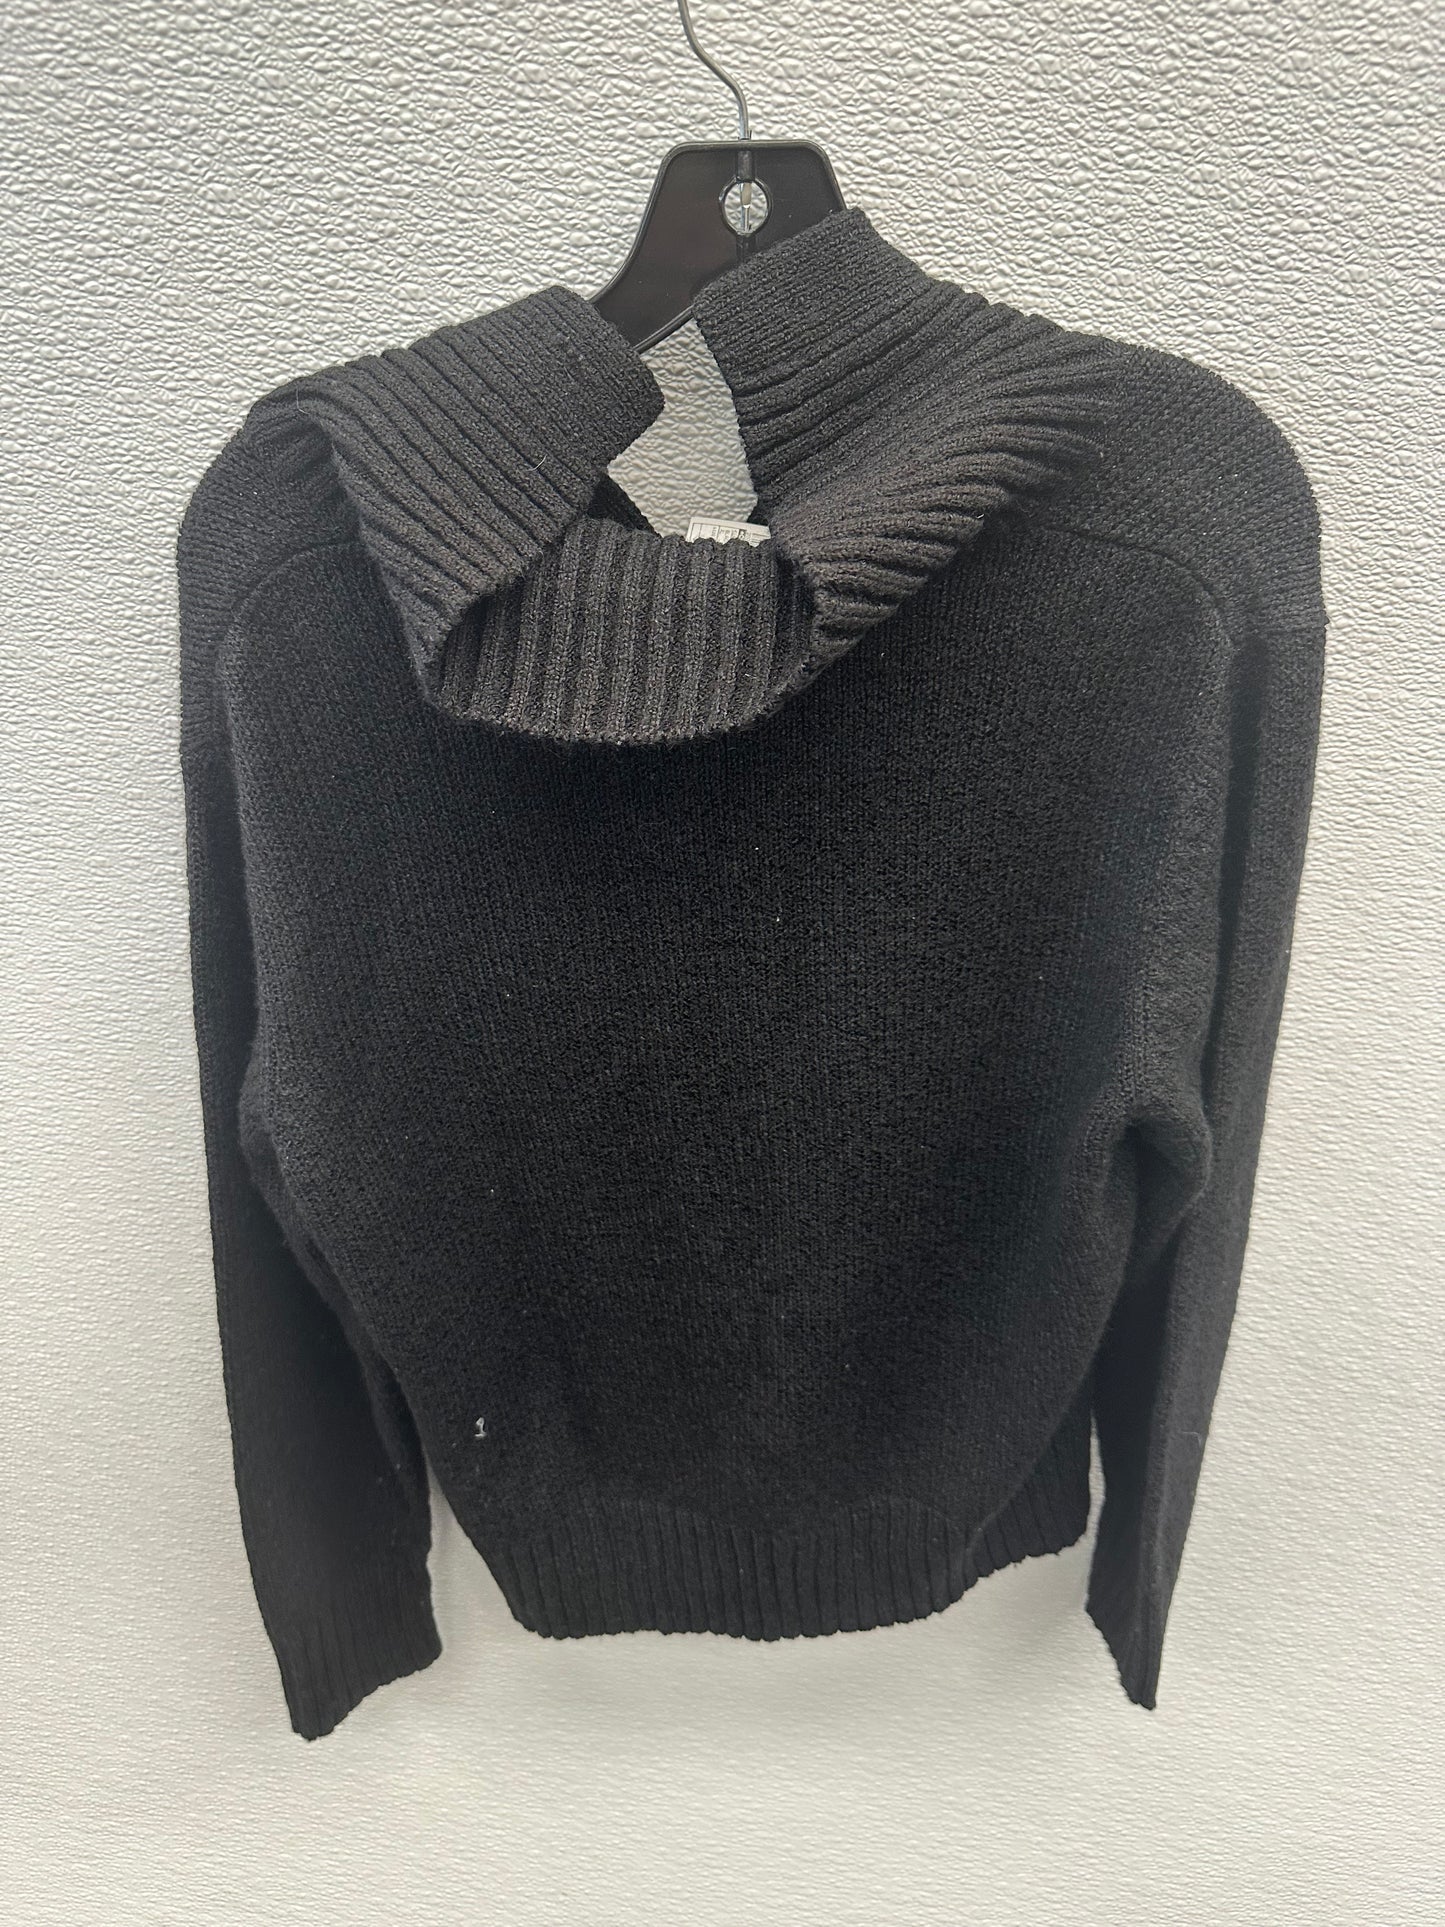 Sweater By Carolyn Taylor  Size: Xl